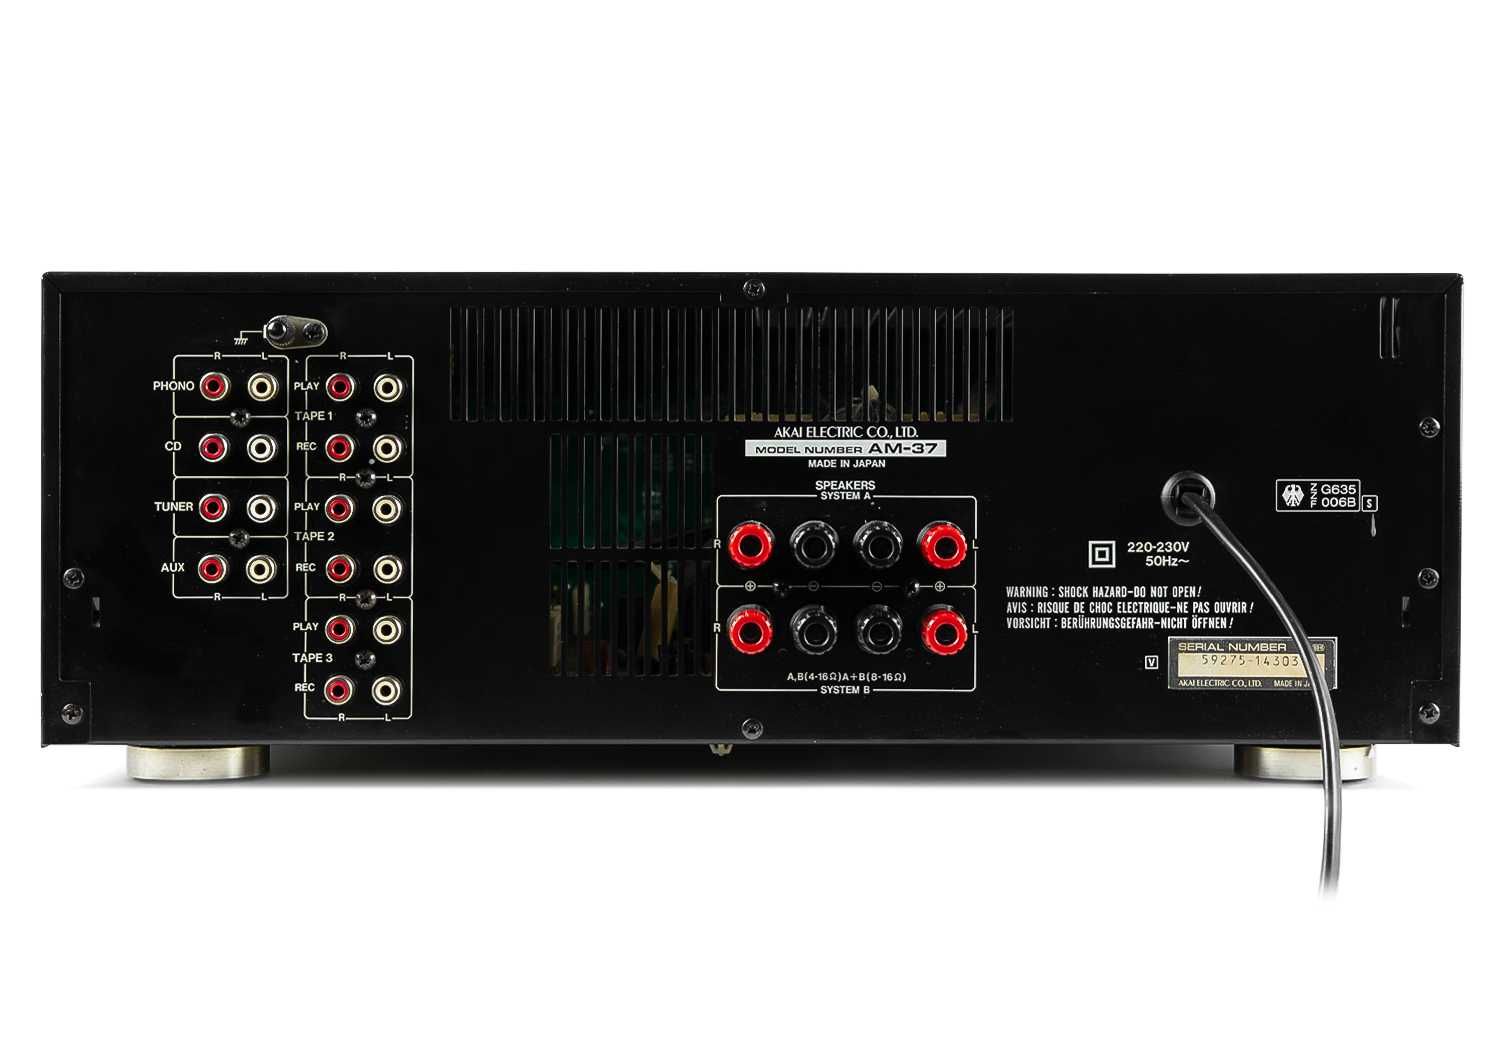 Akai AM-37 Stereo Integrated Amplifier 2 X 60 watts